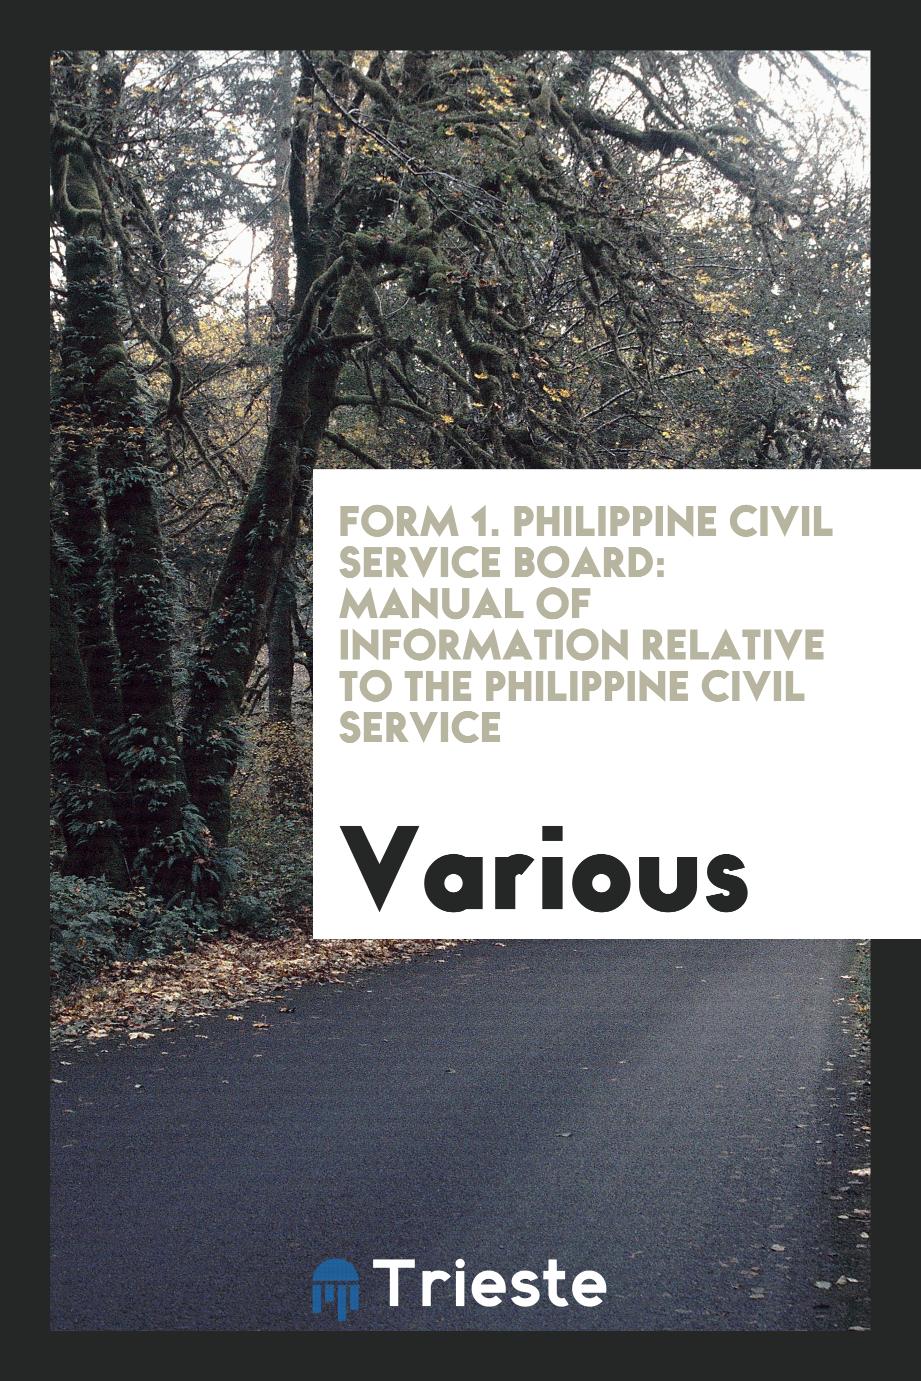 Form 1. Philippine civil service board: Manual of Information Relative to the Philippine Civil Service